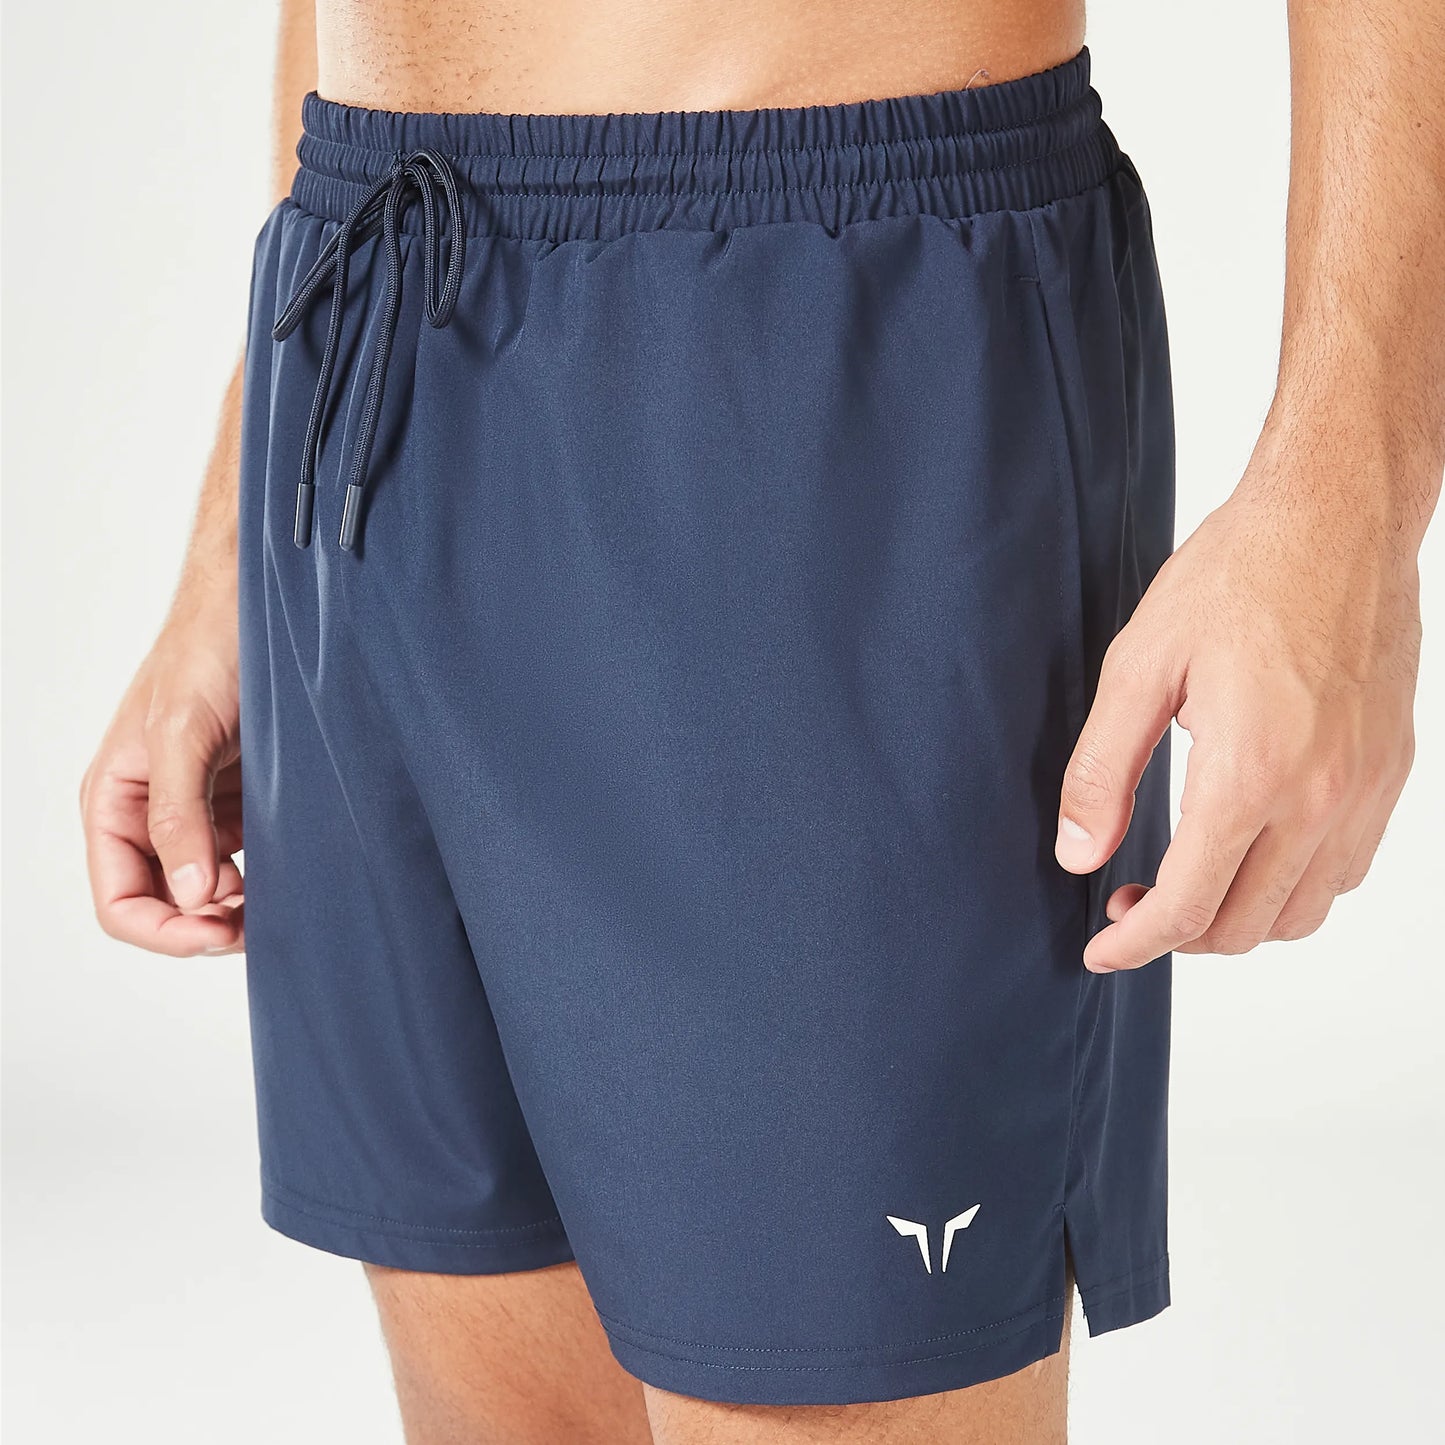 Essential 5" Shorts 2.0 - Navy